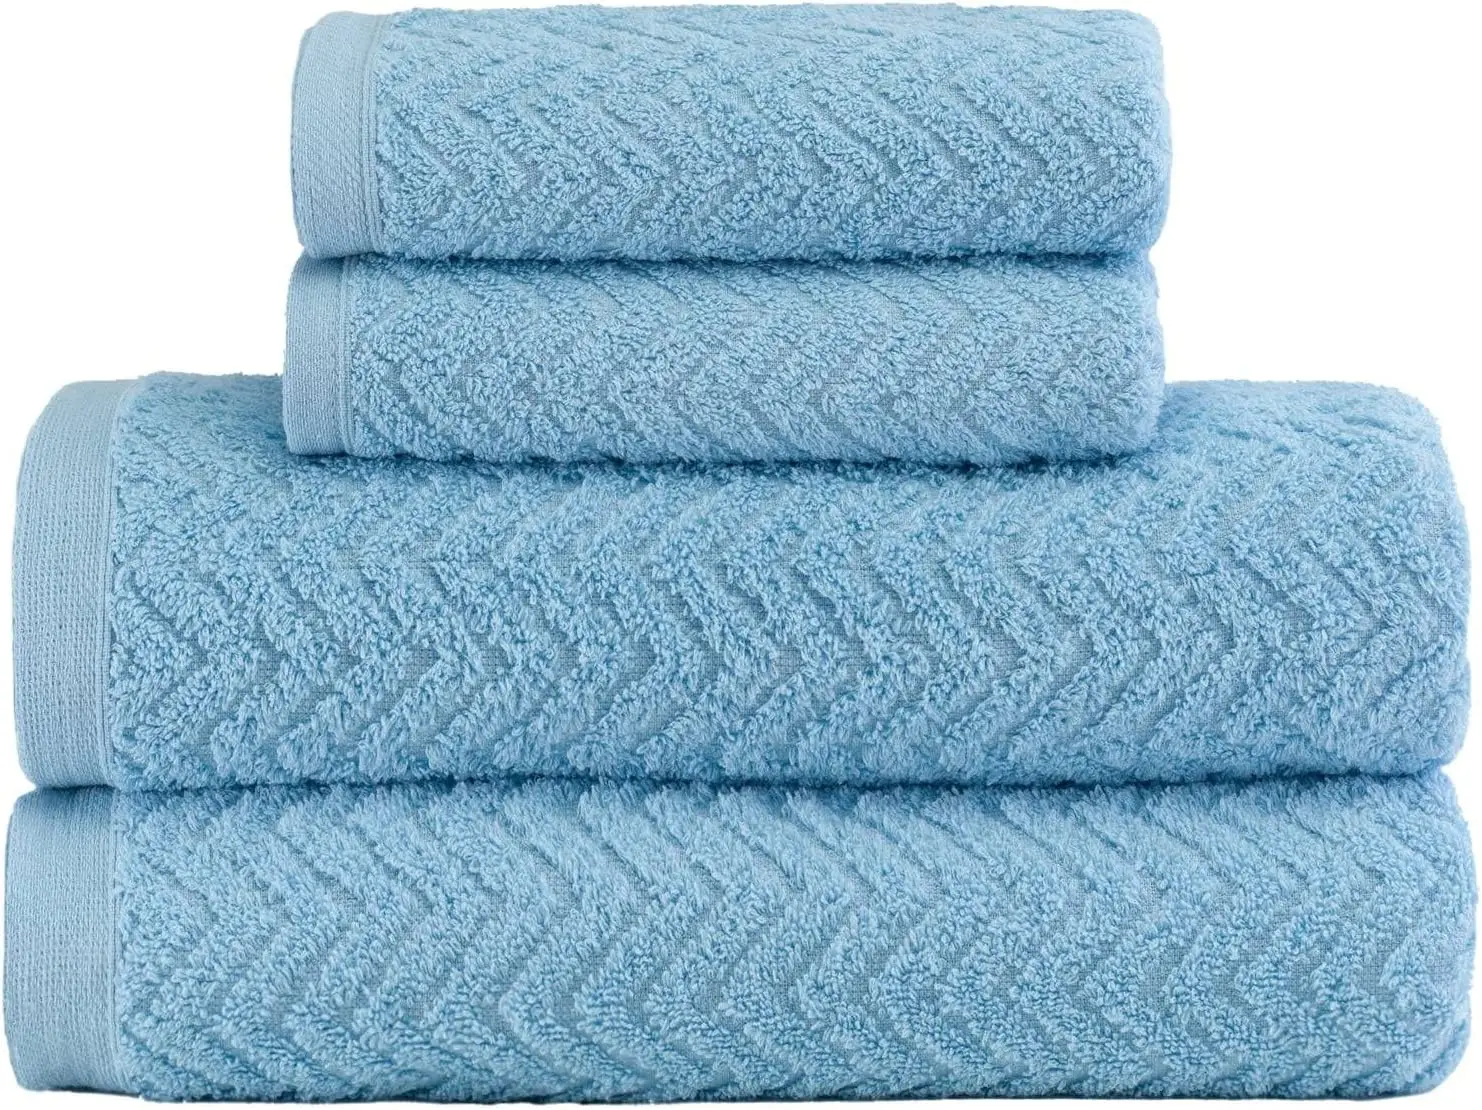 

car wash Set Bath Towels with 4 pieces 500g/m² Cotton Combed Yarn PREMIUM - Milly Lead Microfiber Towels Bathroom Hotel Bath To